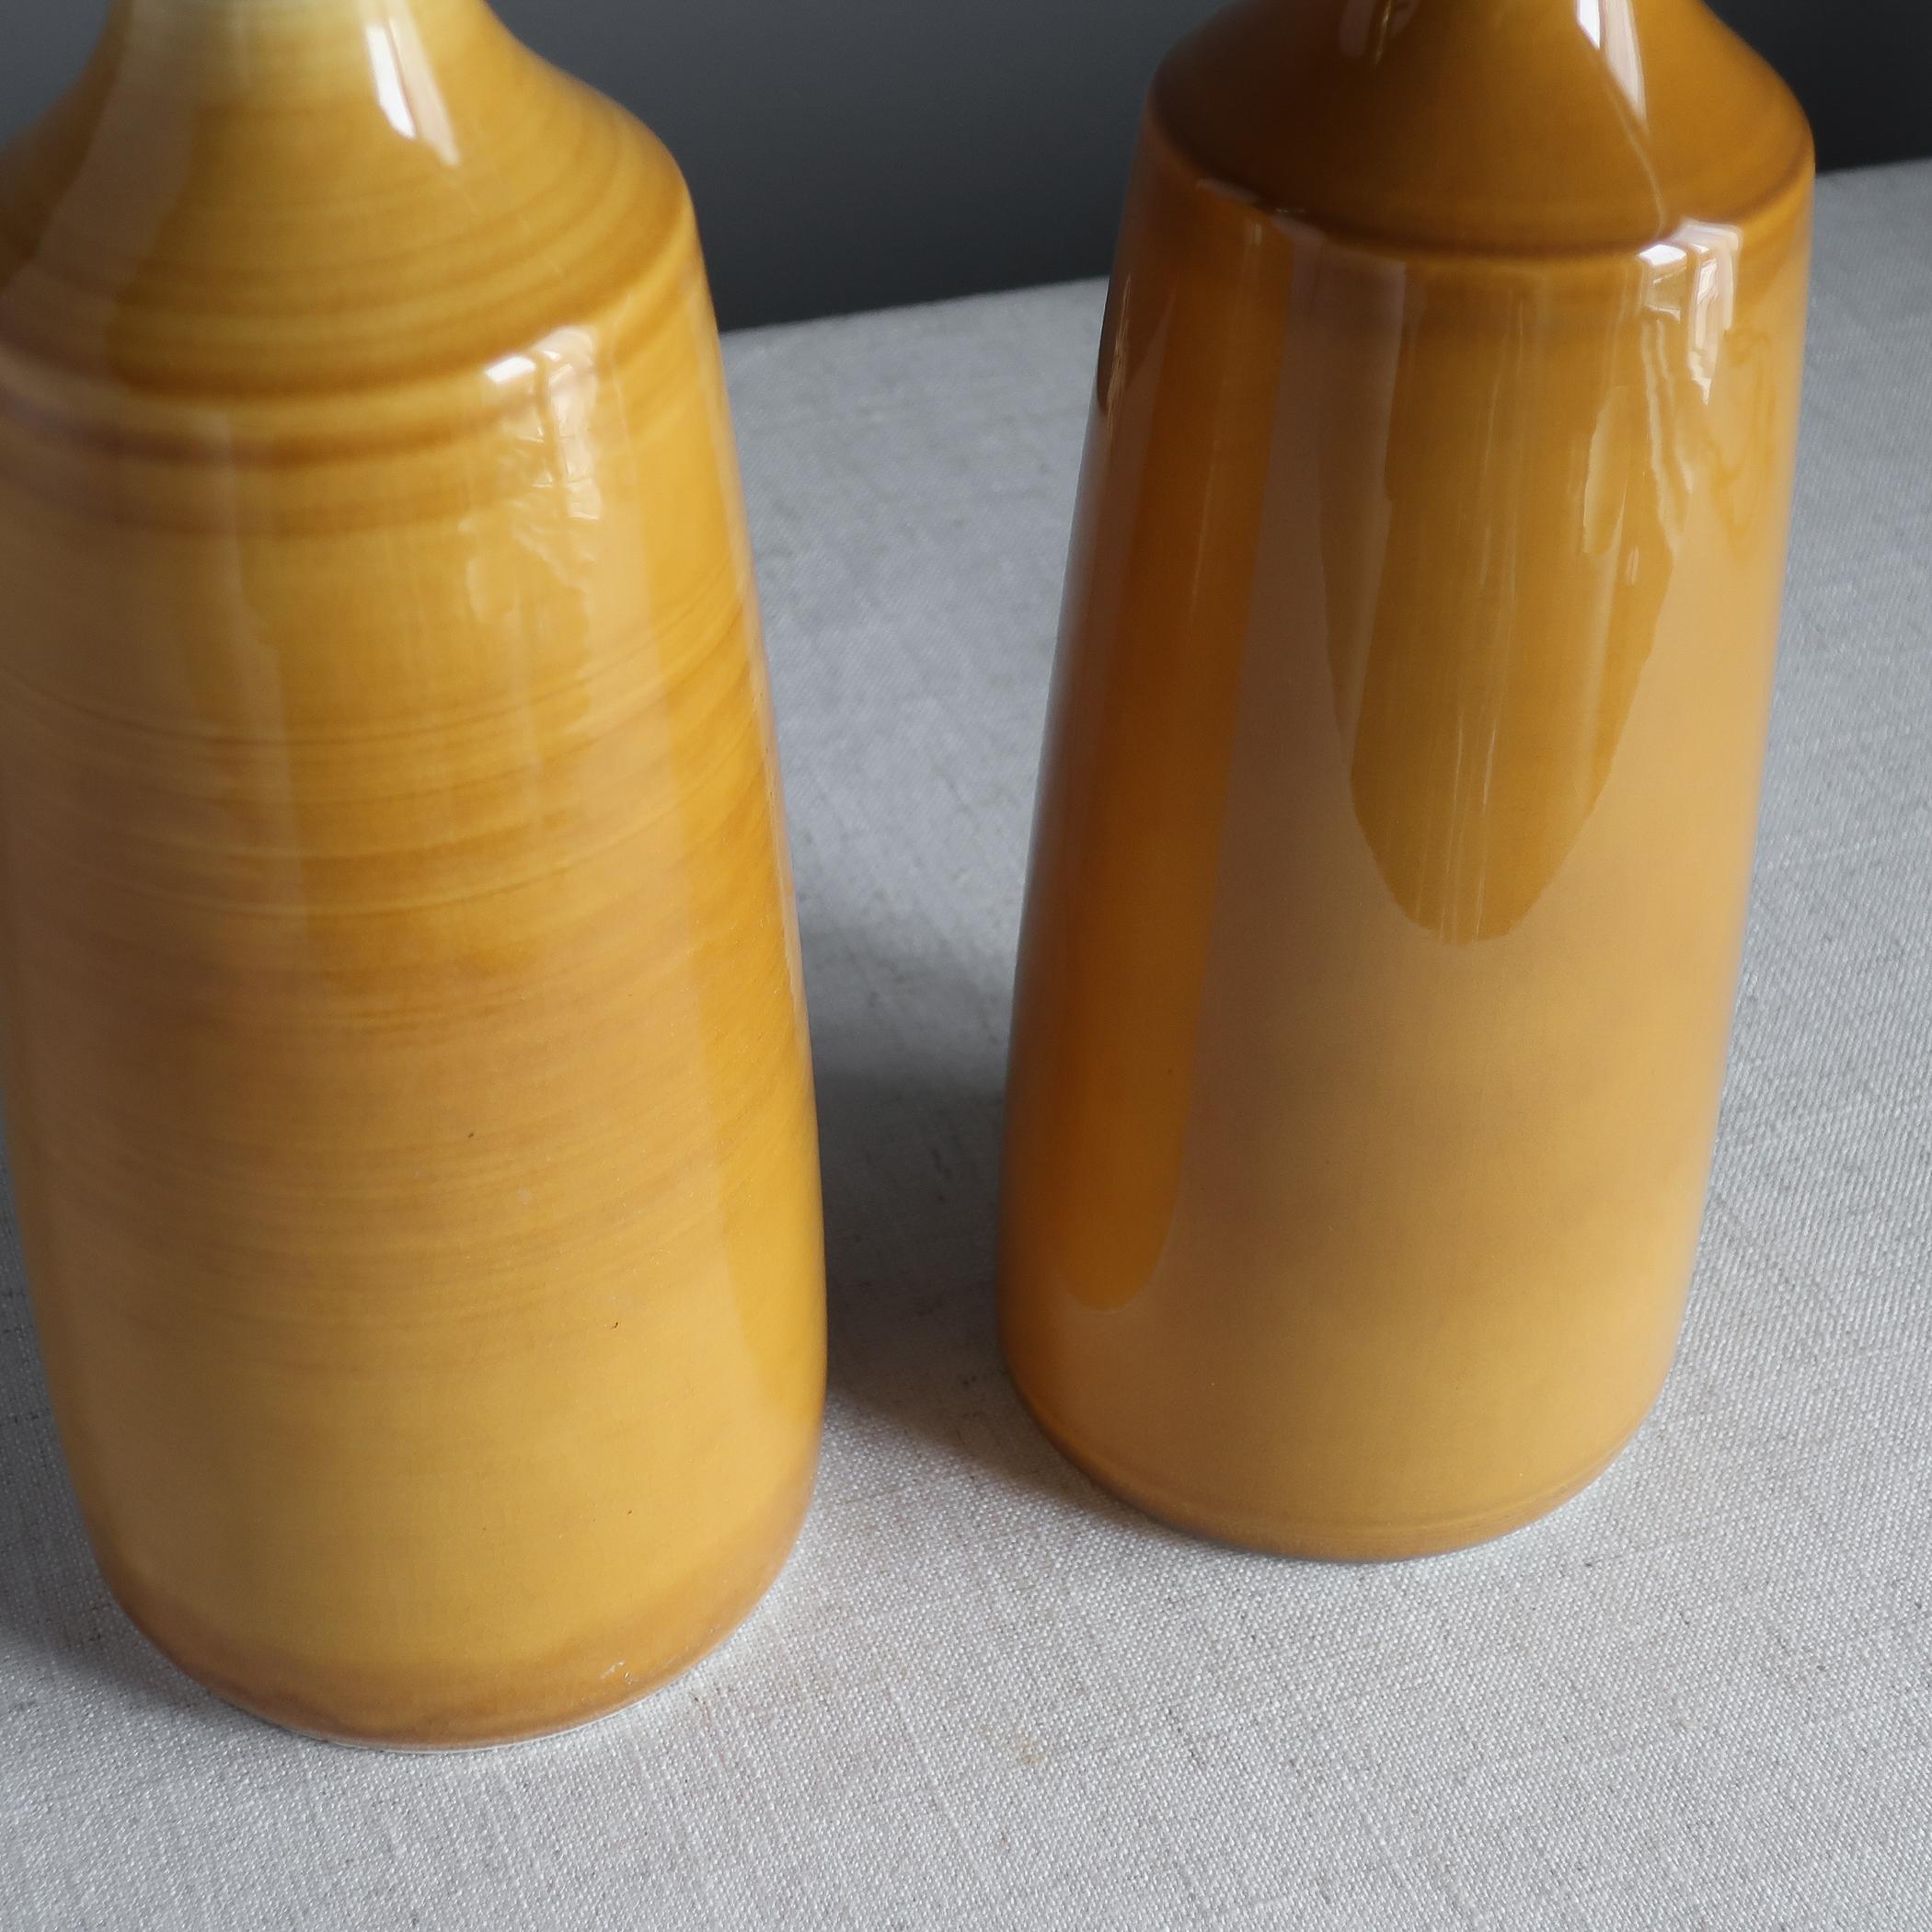 Canadian Pair of Bostlund Small Yellow Ceramic Lamps, Danish Modern Stoneware